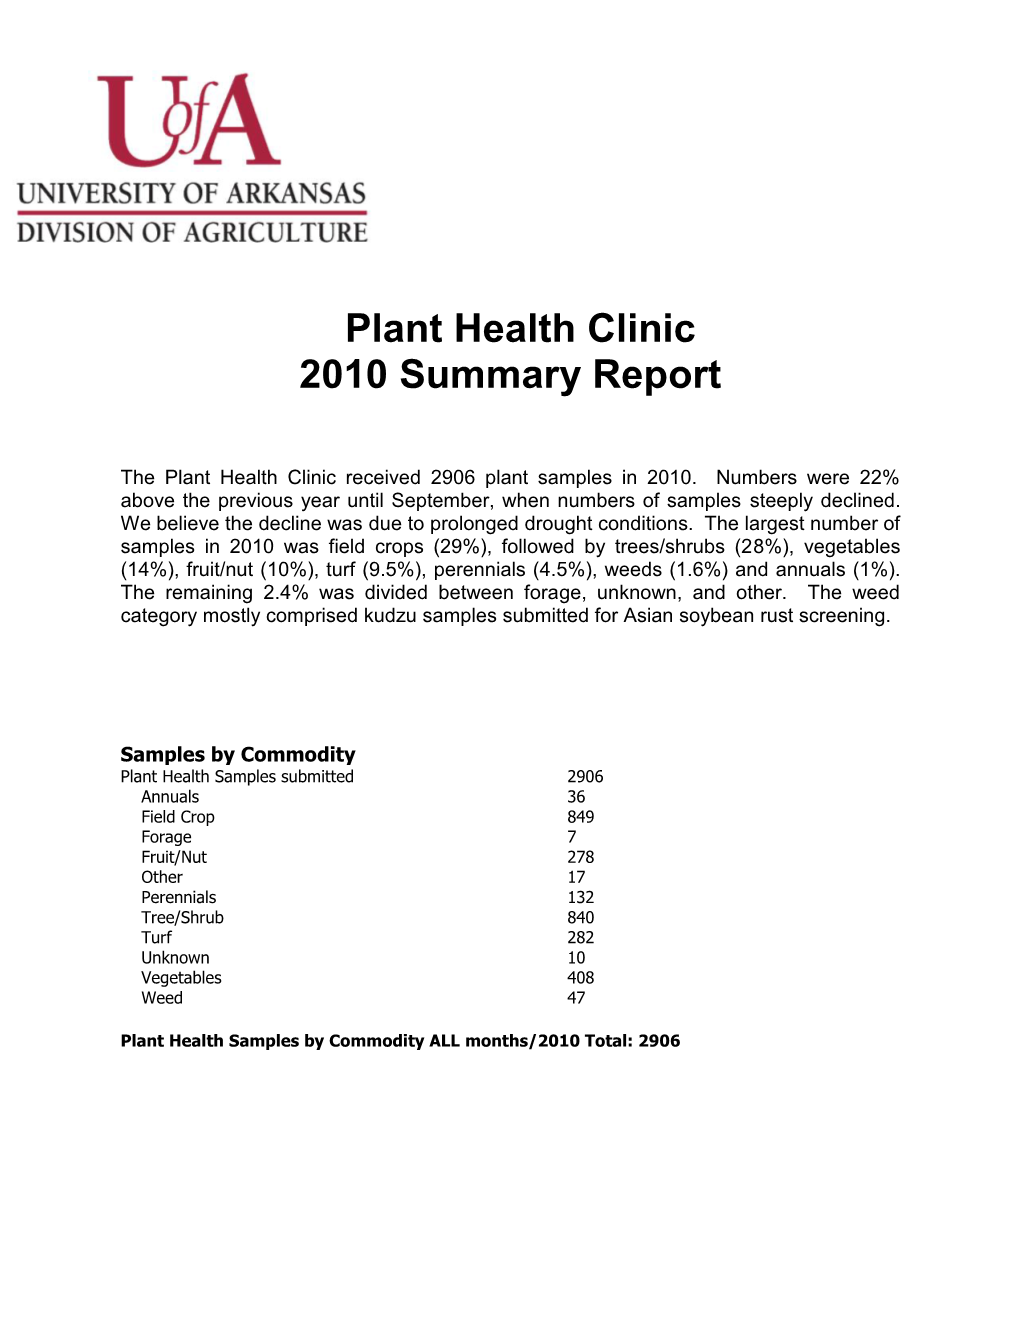 Plant Health Clinic 2010 Summary Report